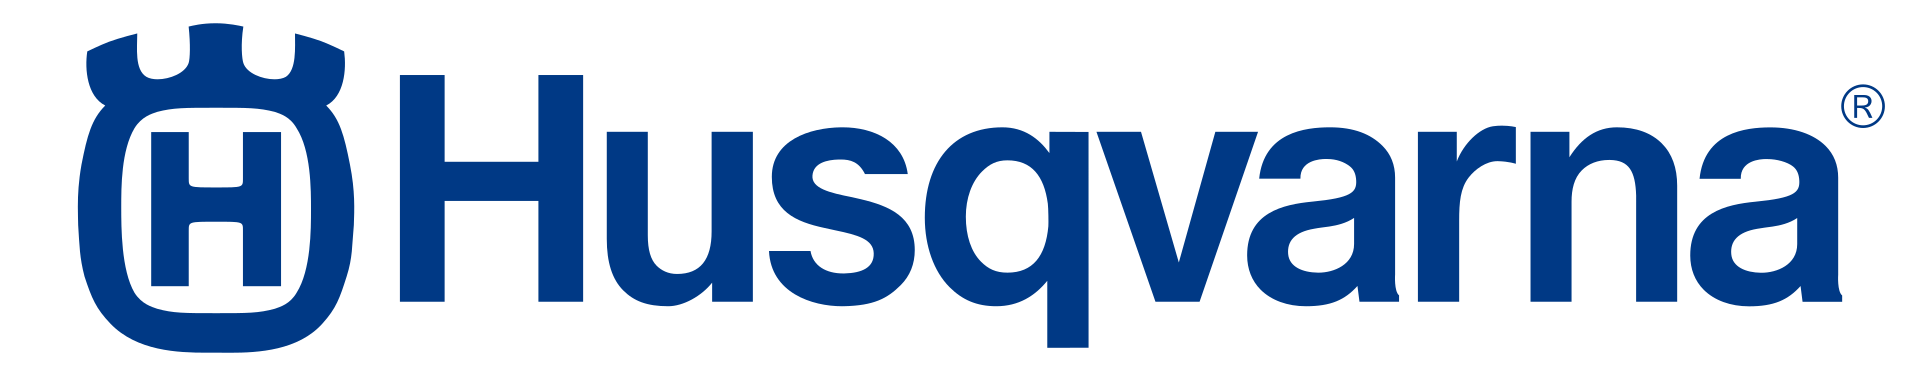 1920px-Husqvarna_logo.svg